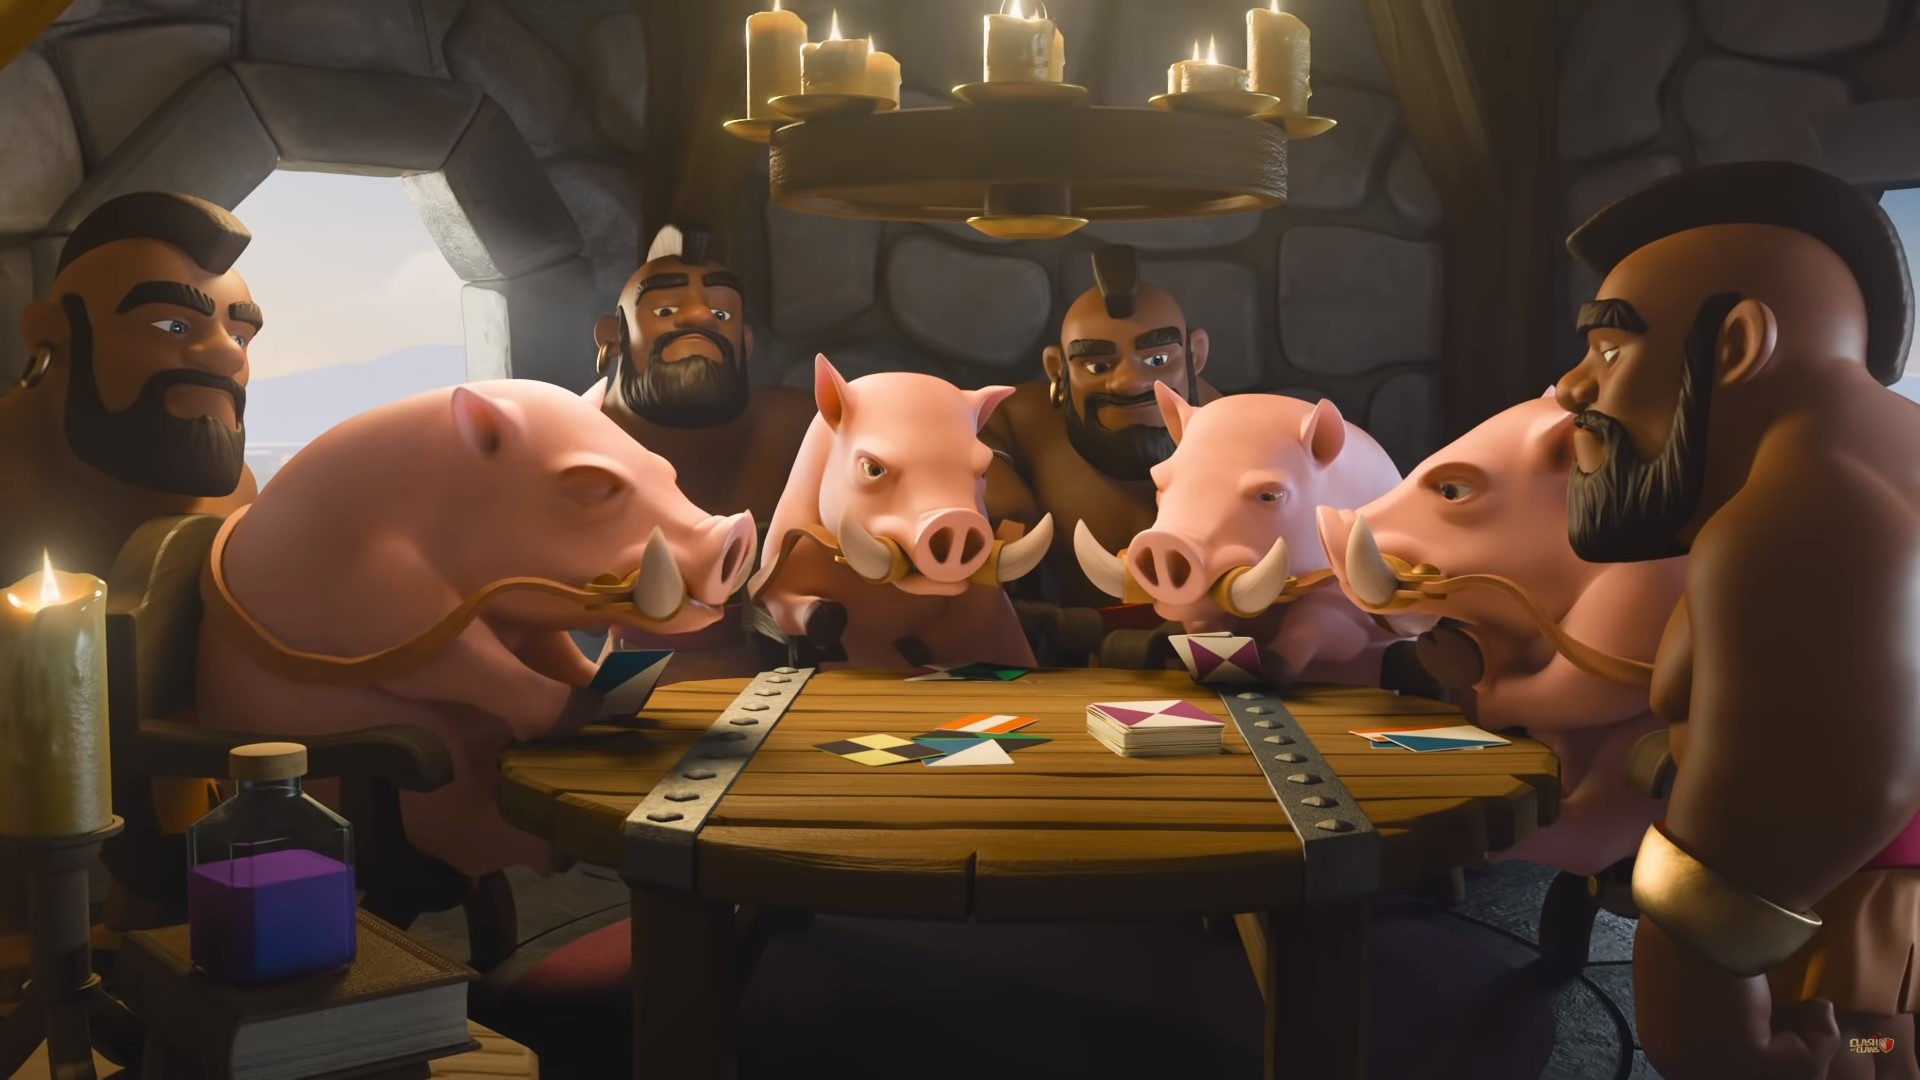 Beste mobile strategispill: Clash of Clans. Bildet viser en haug med mennesker og griser som sitter rundt et bord